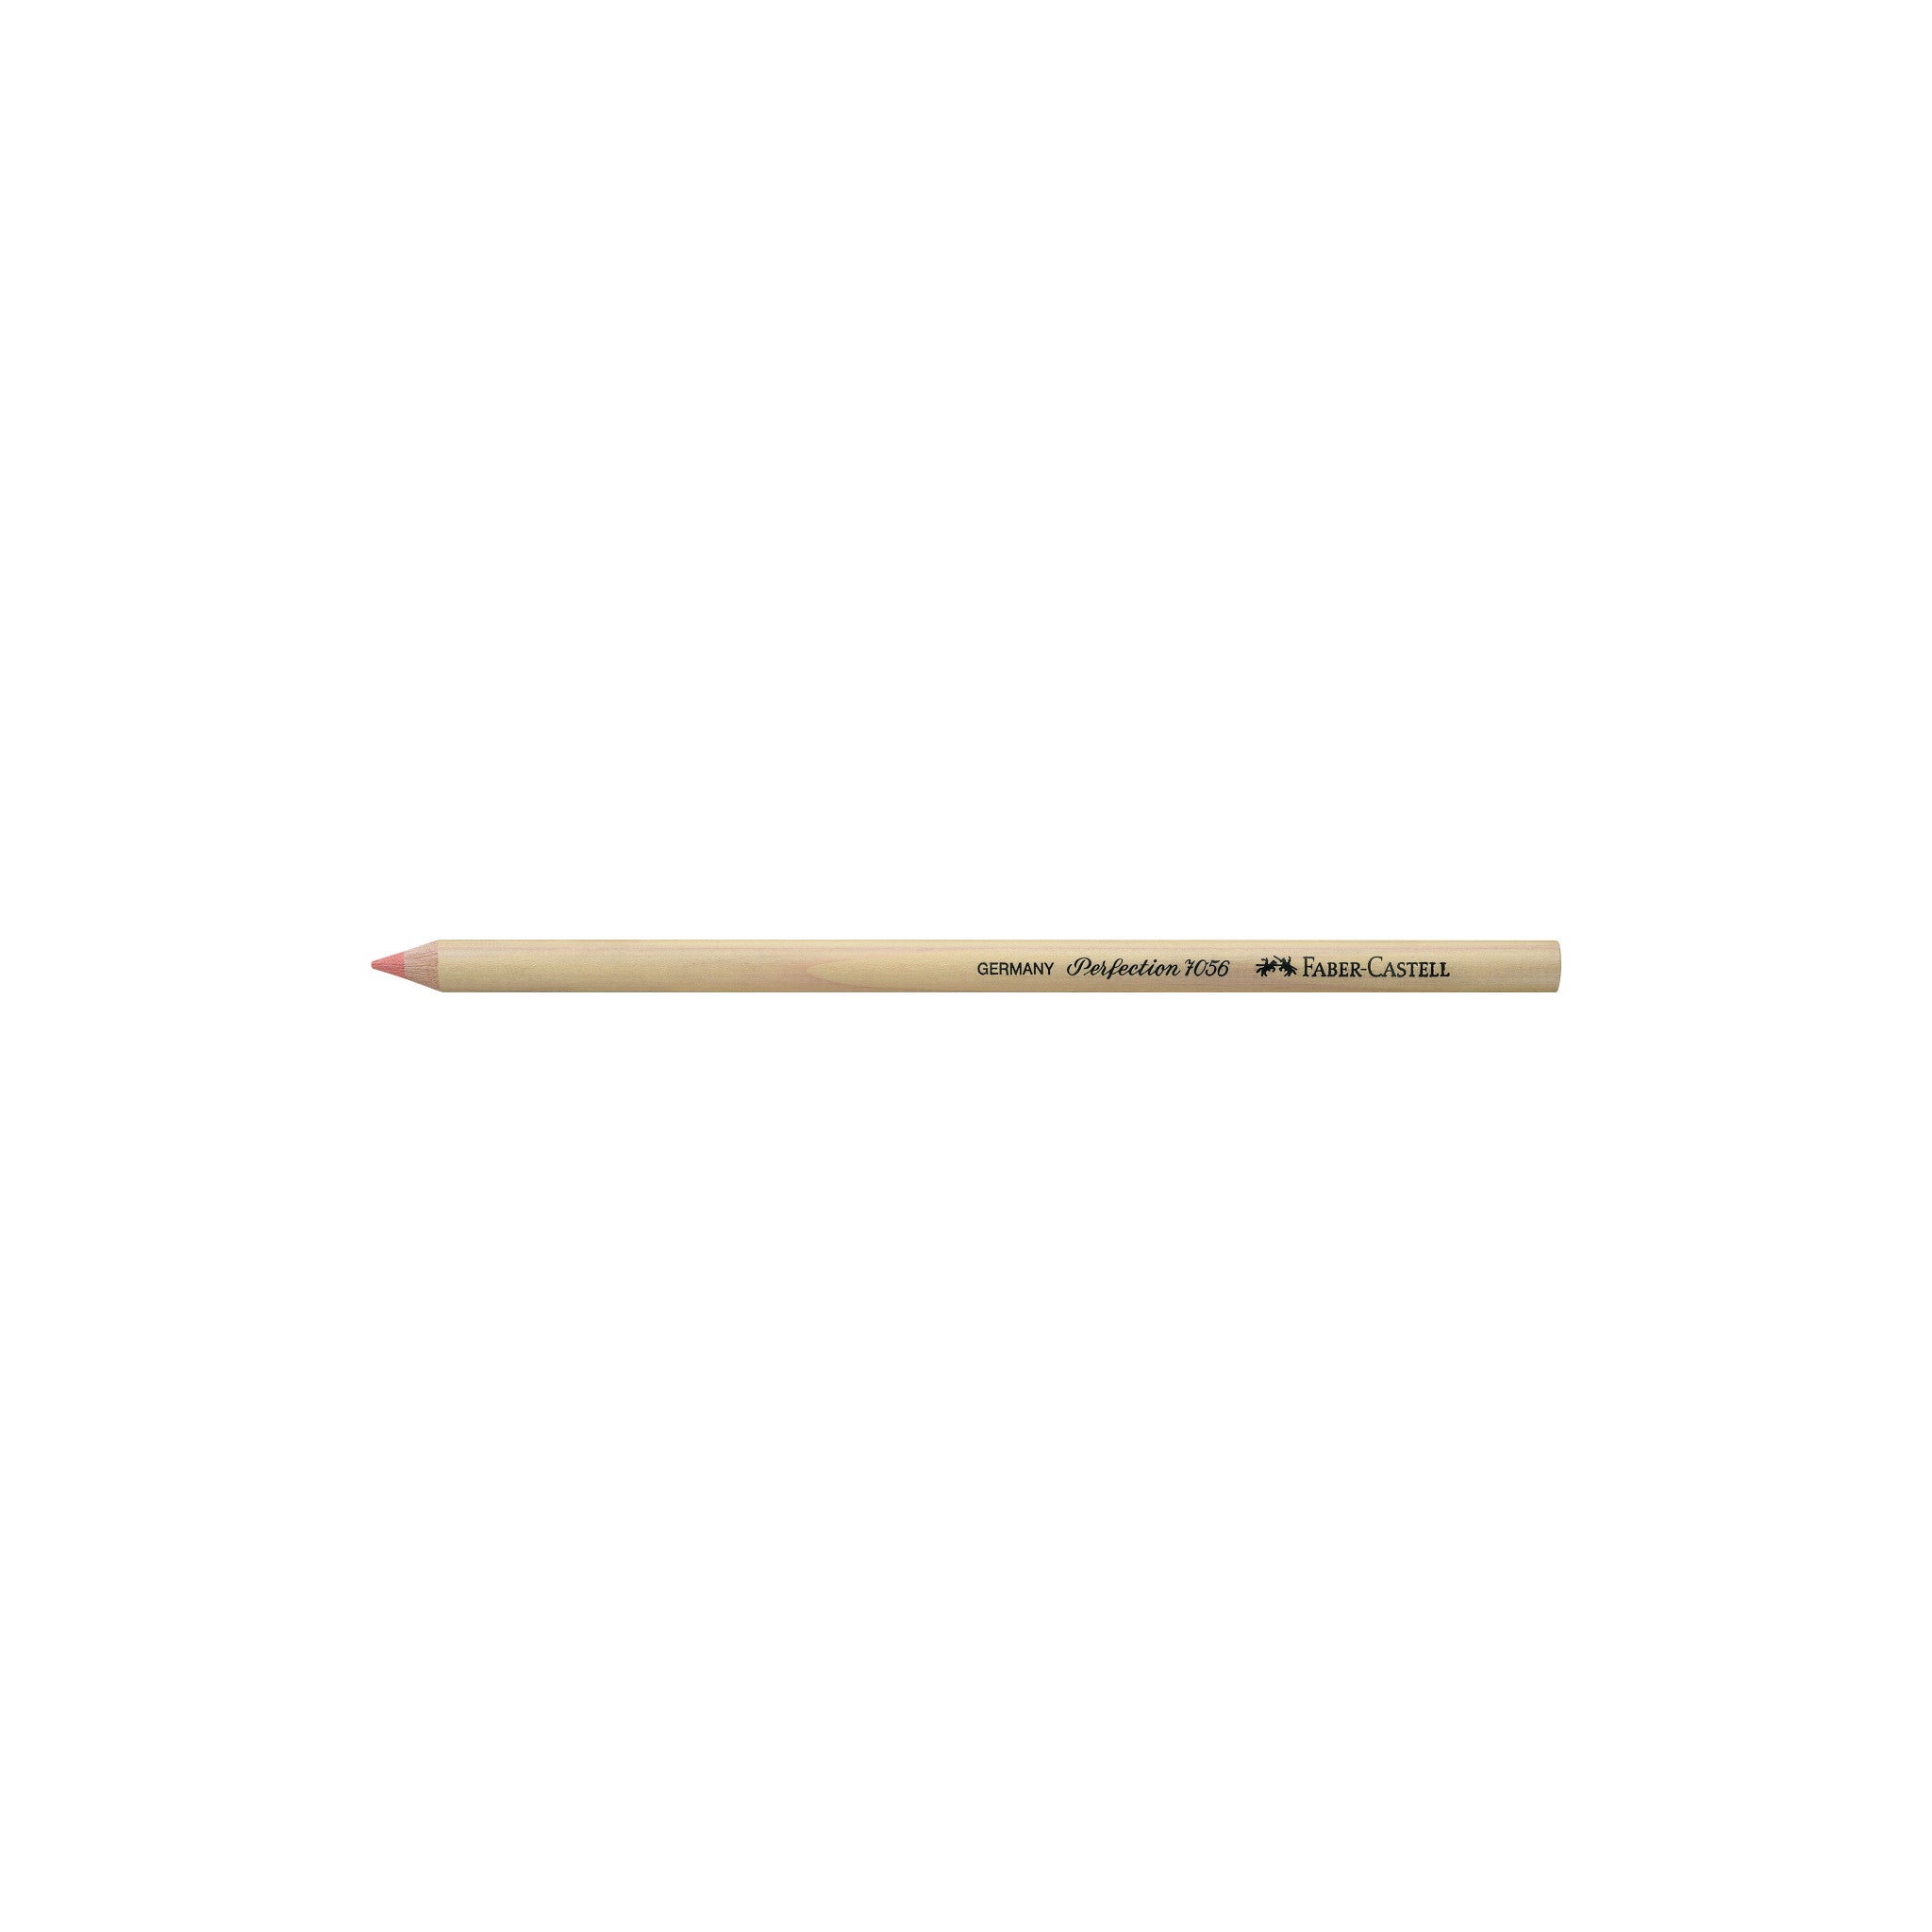 Perfection 7058 Eraser Pencil - #185812 – Faber-Castell USA